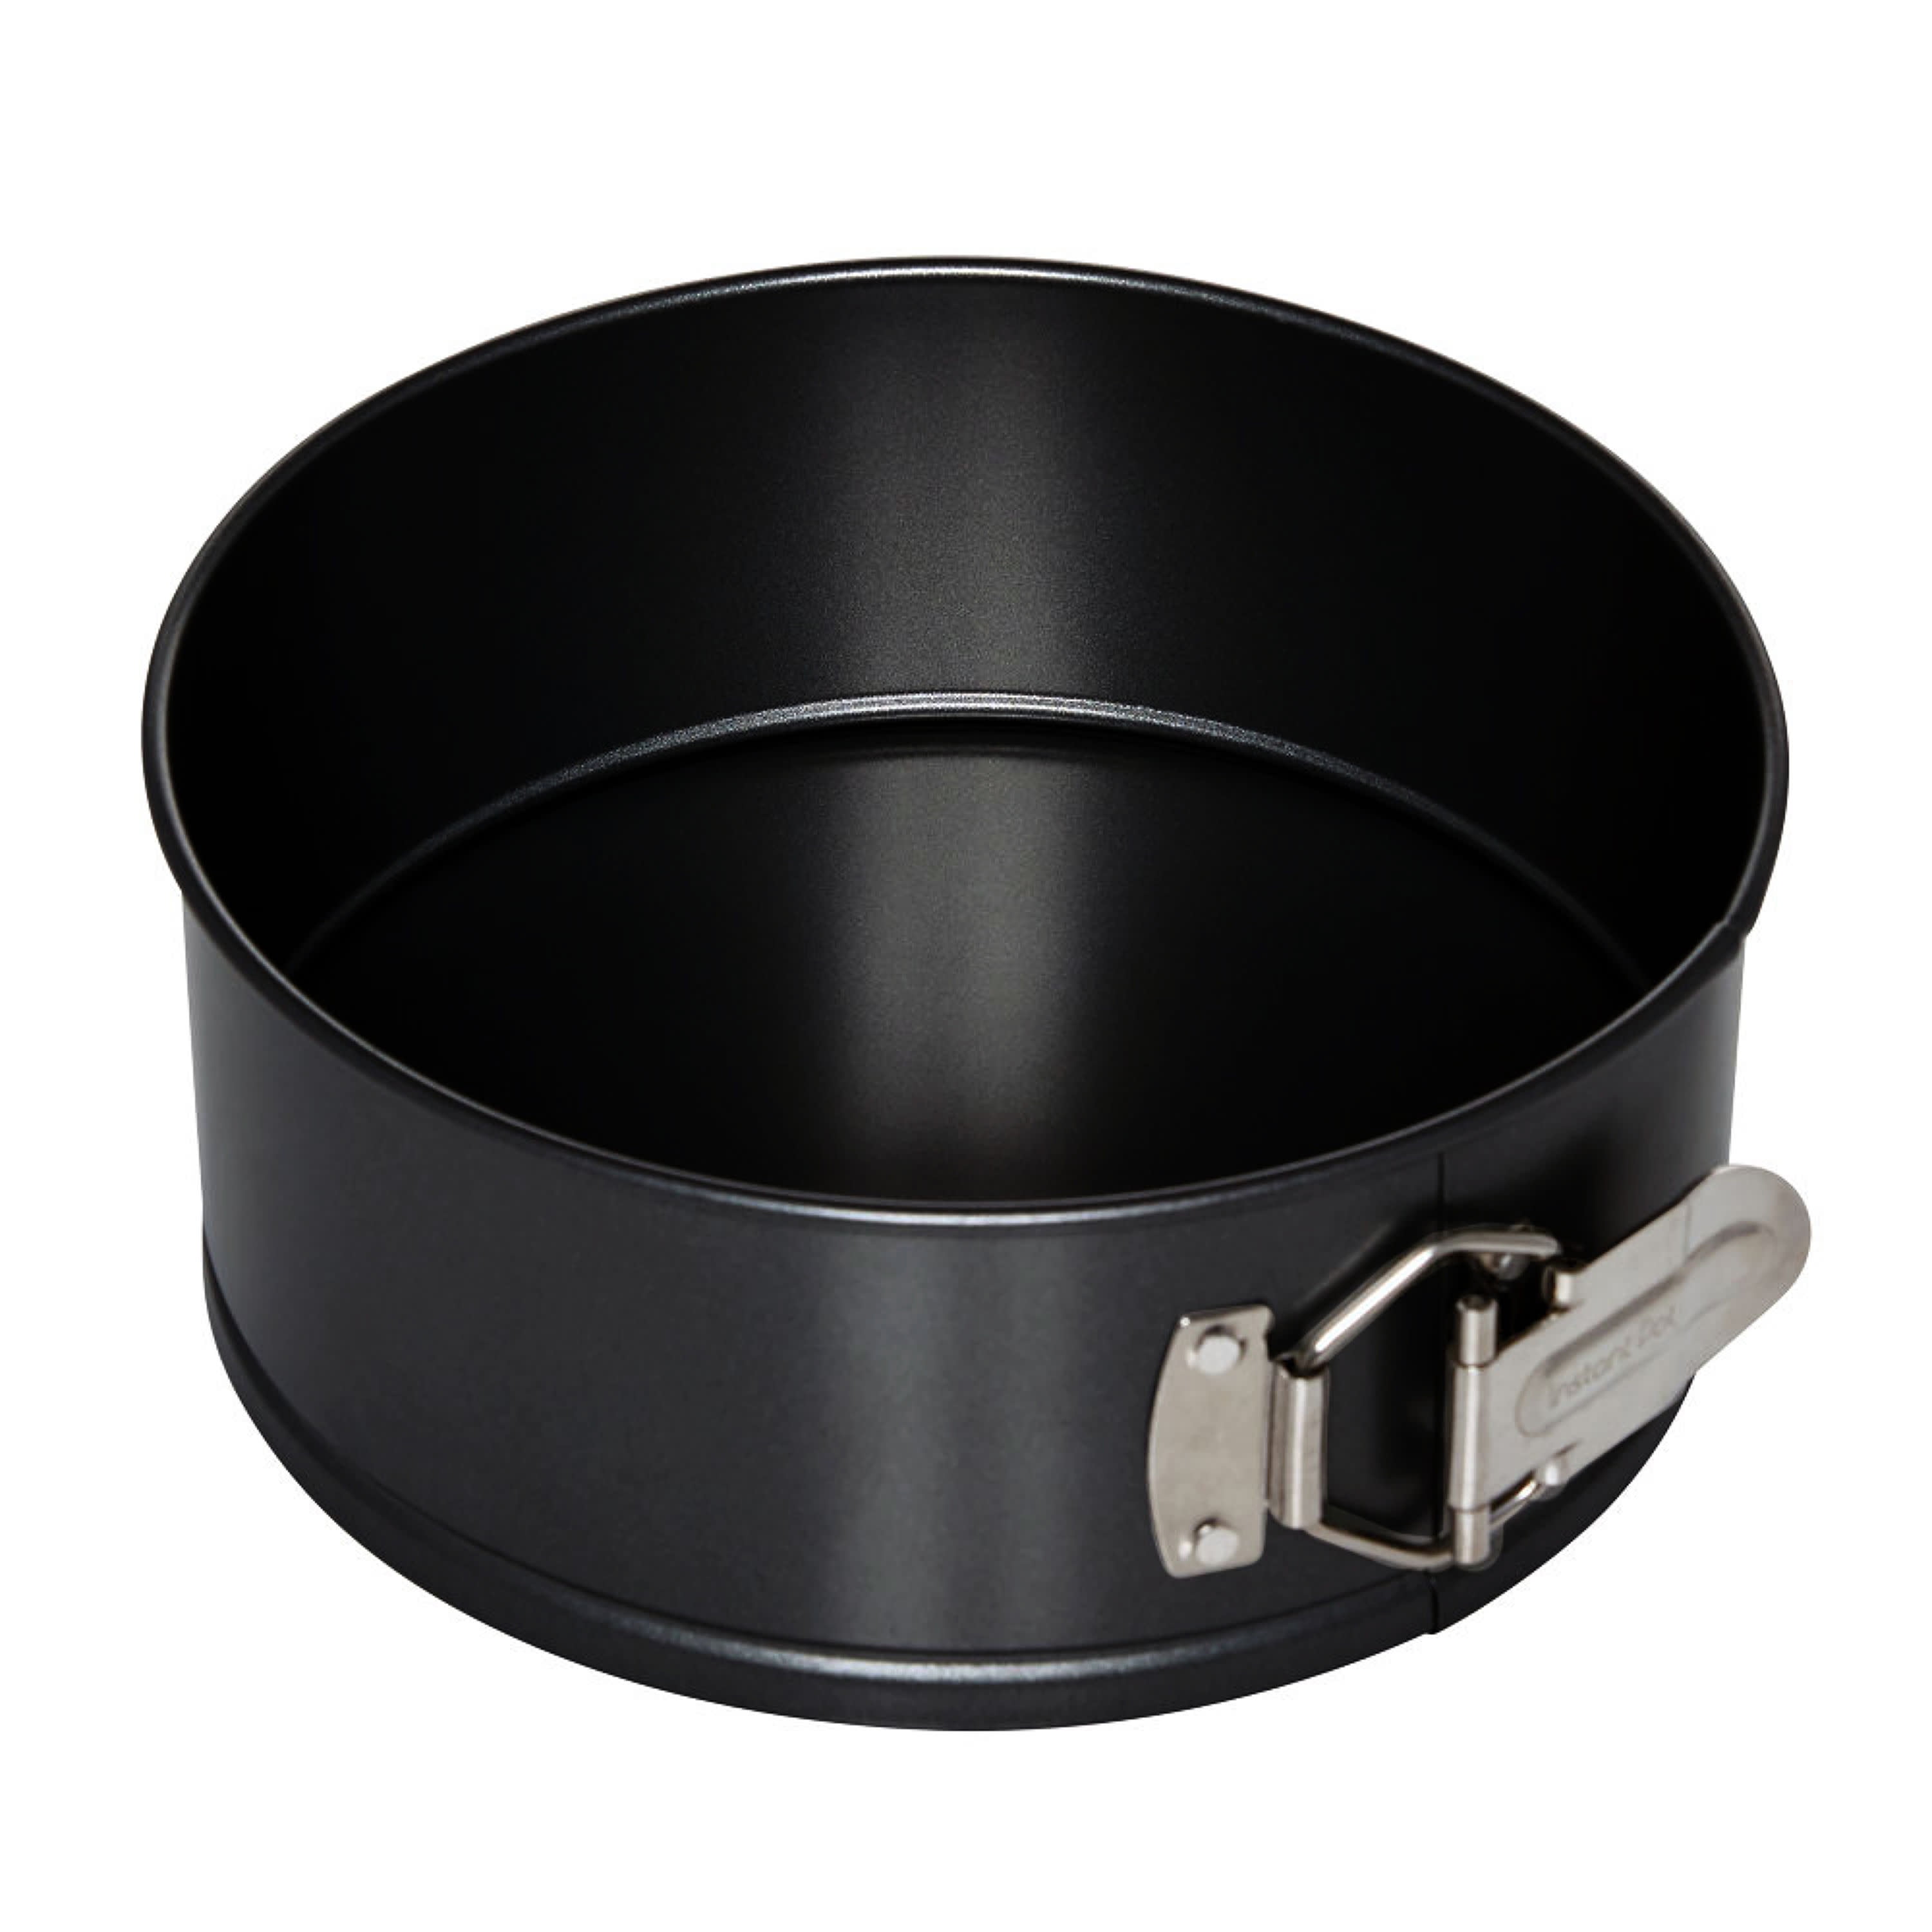 Instant Pot® 6 & 8-quart Silicone Spring Form Round Cake Pan